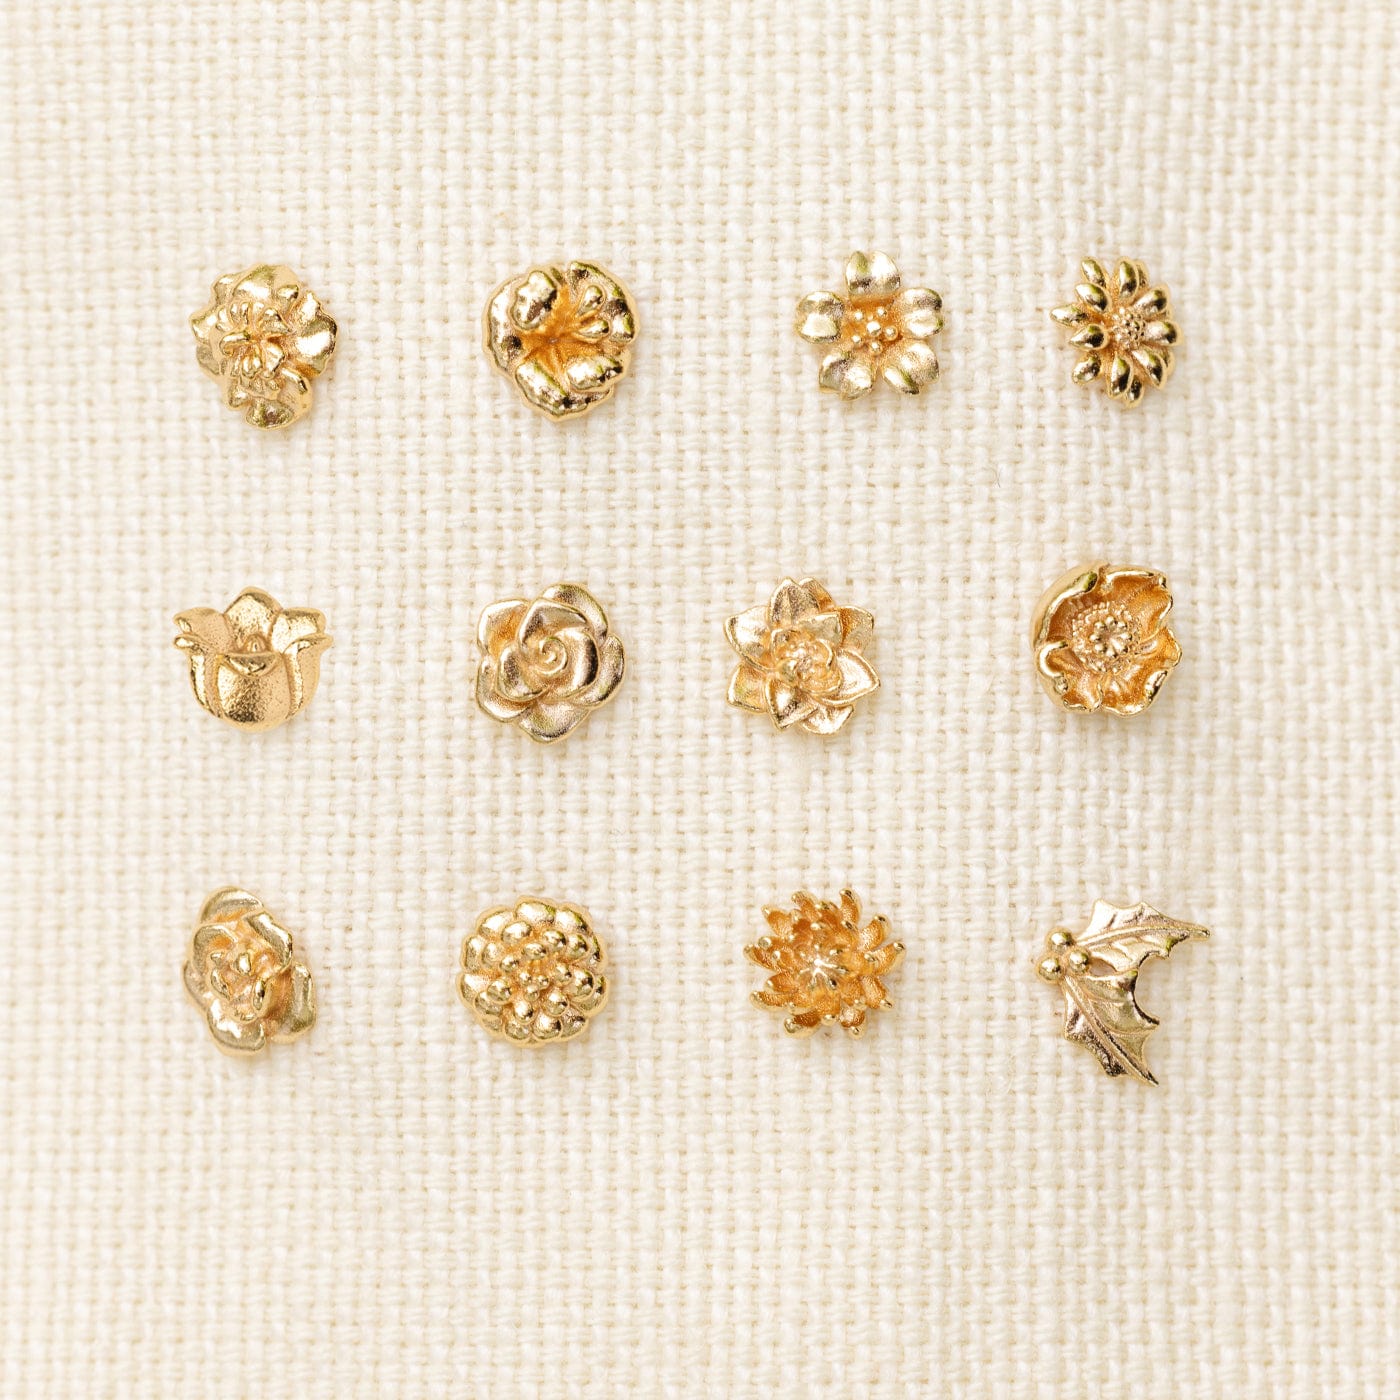 June Birth Flower Stud Earrings Gold Vermeil Earring